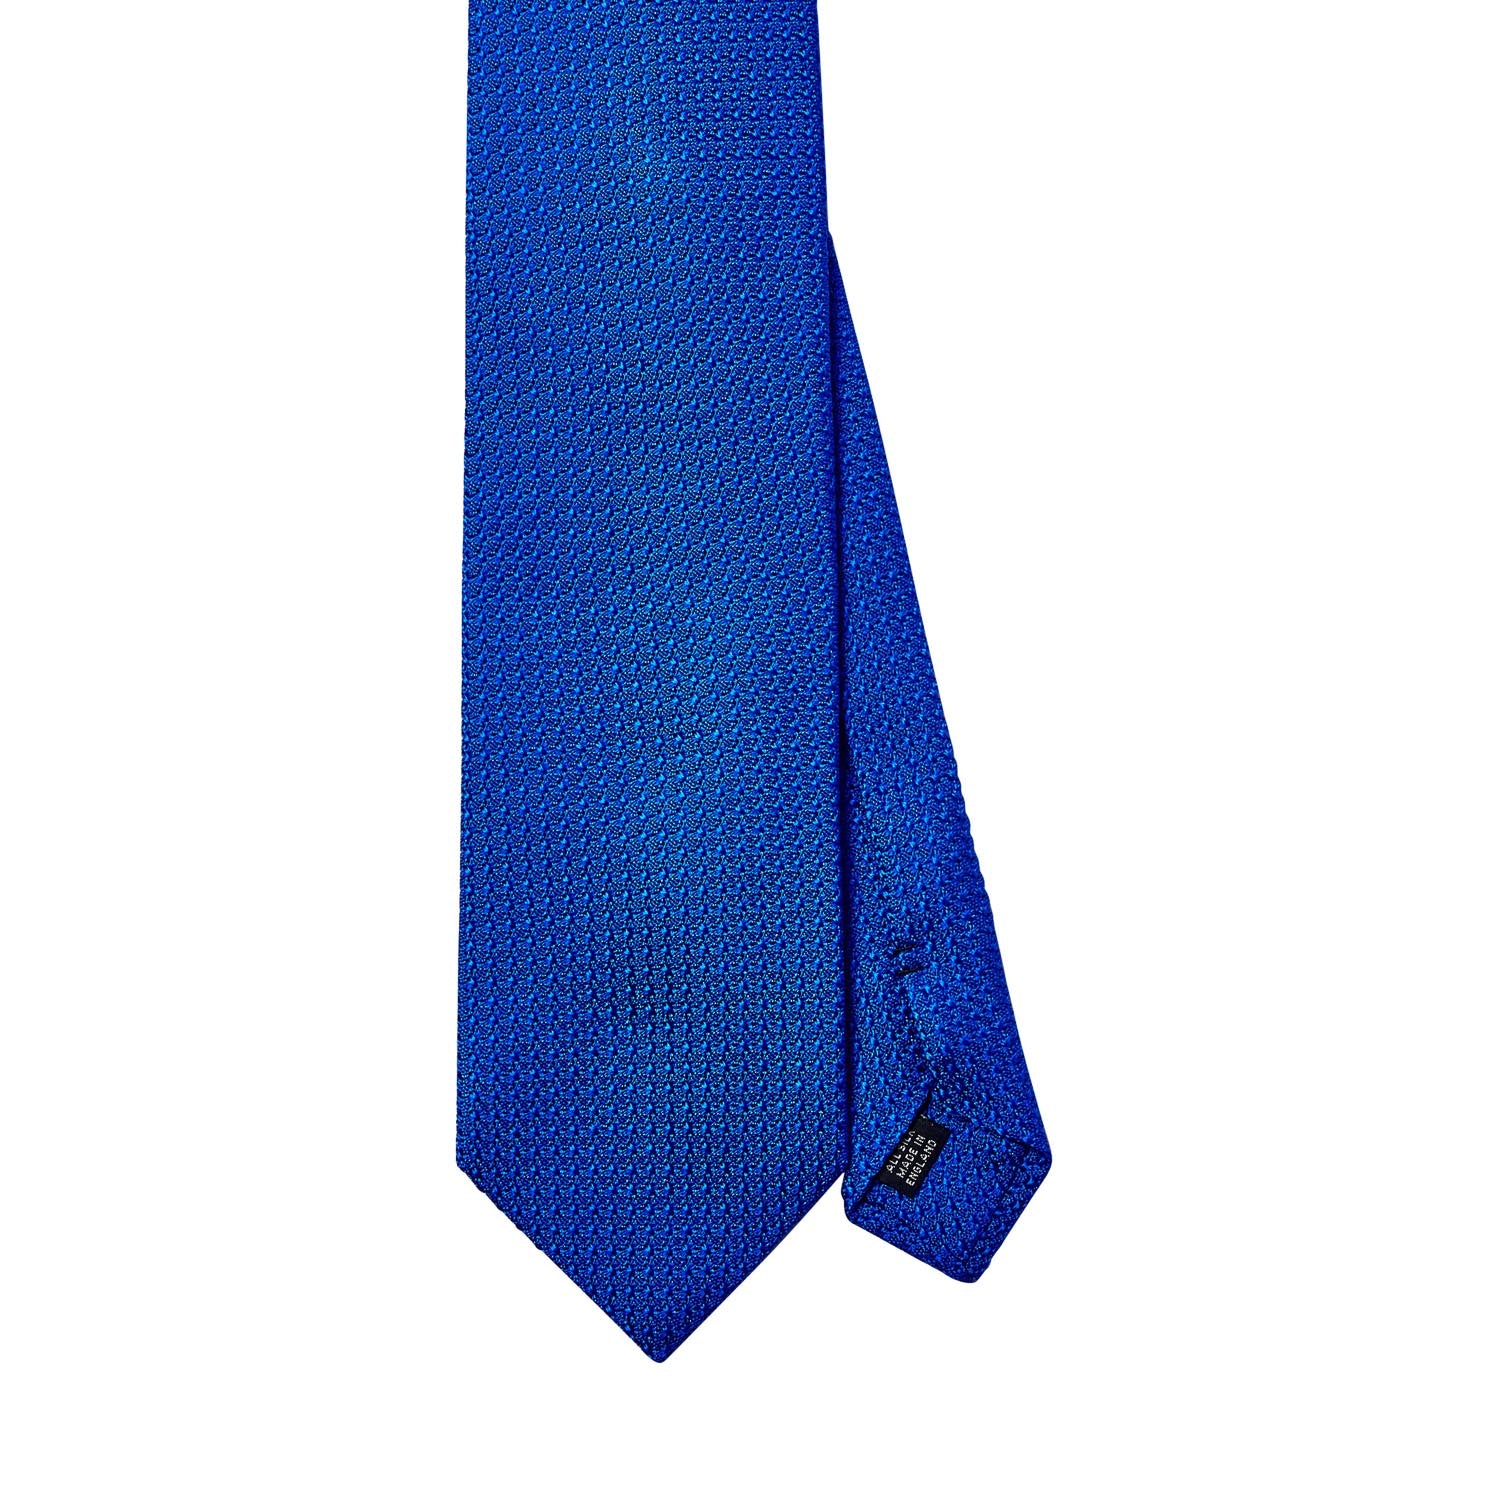 A handmade Sovereign Grade Bright Blue Grenadine Grossa tie on a white background, showcasing longevity and quality - KirbyAllison.com ties.